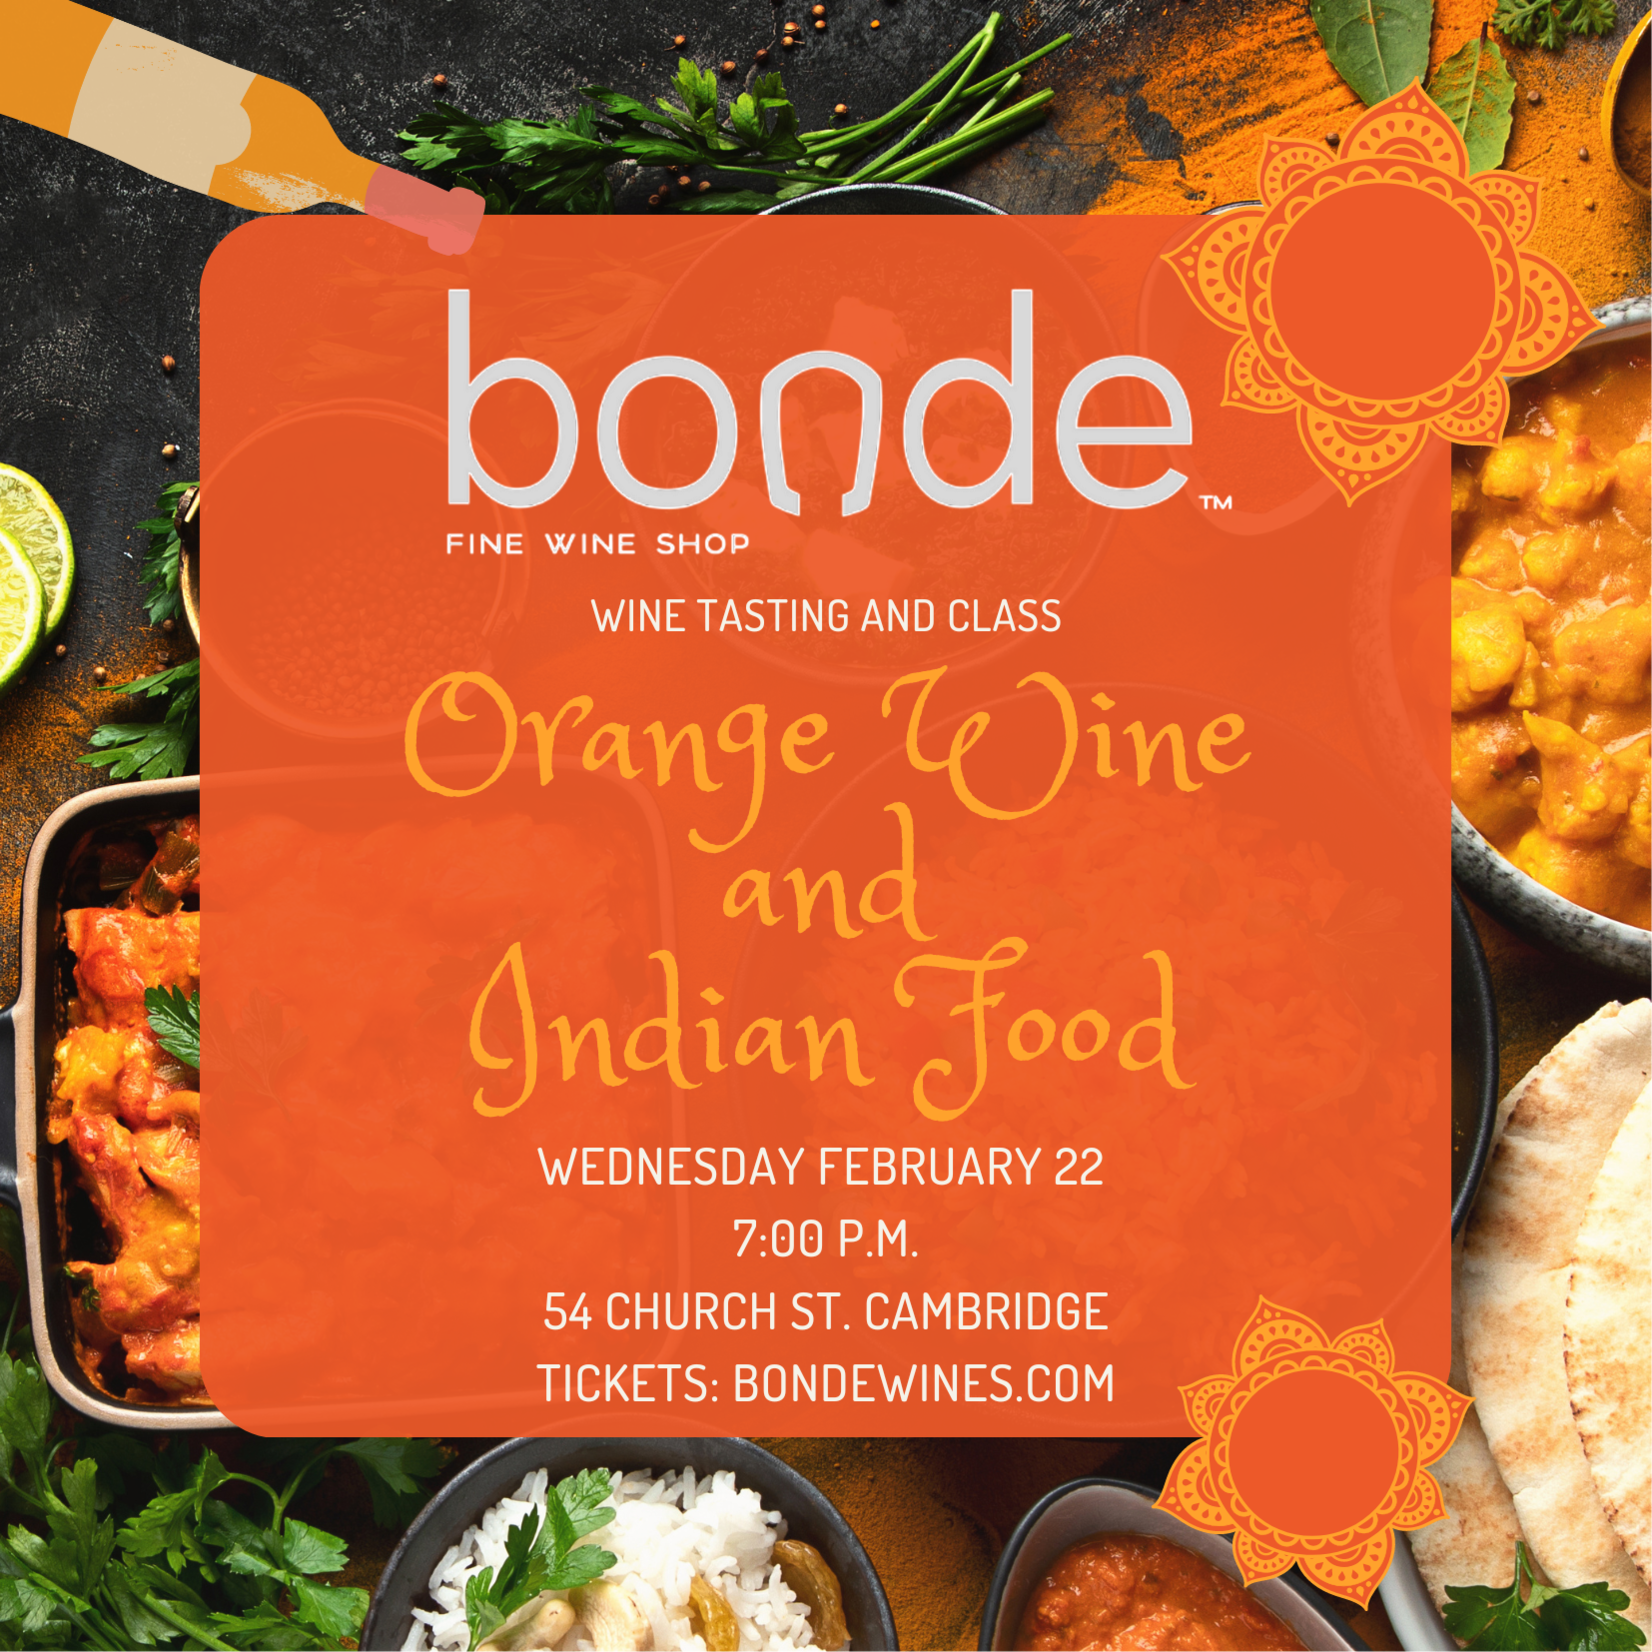 Orange Wine & Indian Food - Wine Tasting & Class - Wednesday February 22, 7:00 p.m.